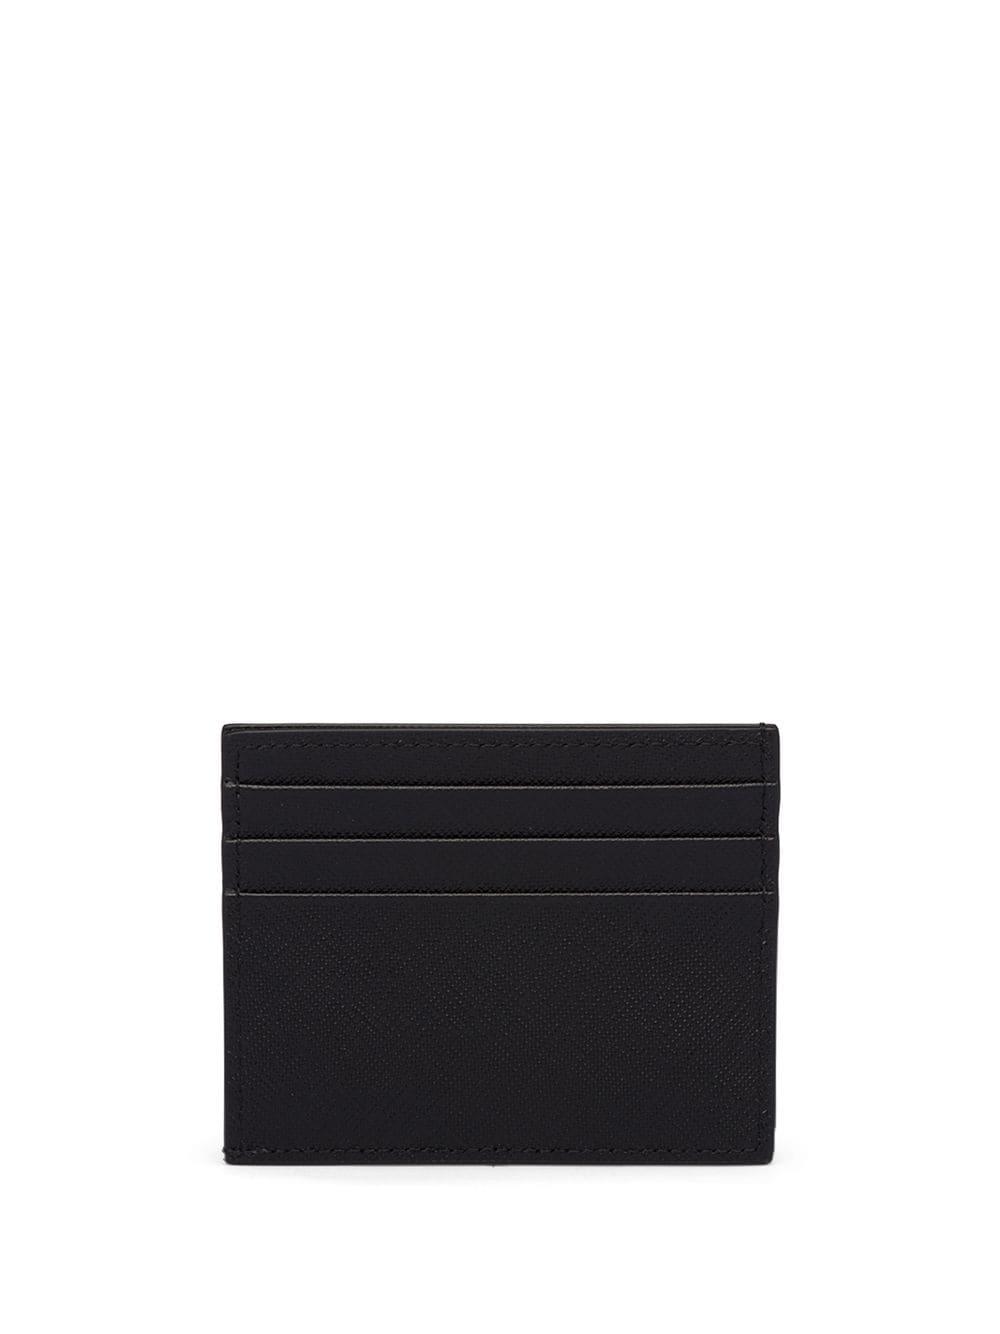 Prada Leather Saffiano Card Holder in Black for Men - Lyst